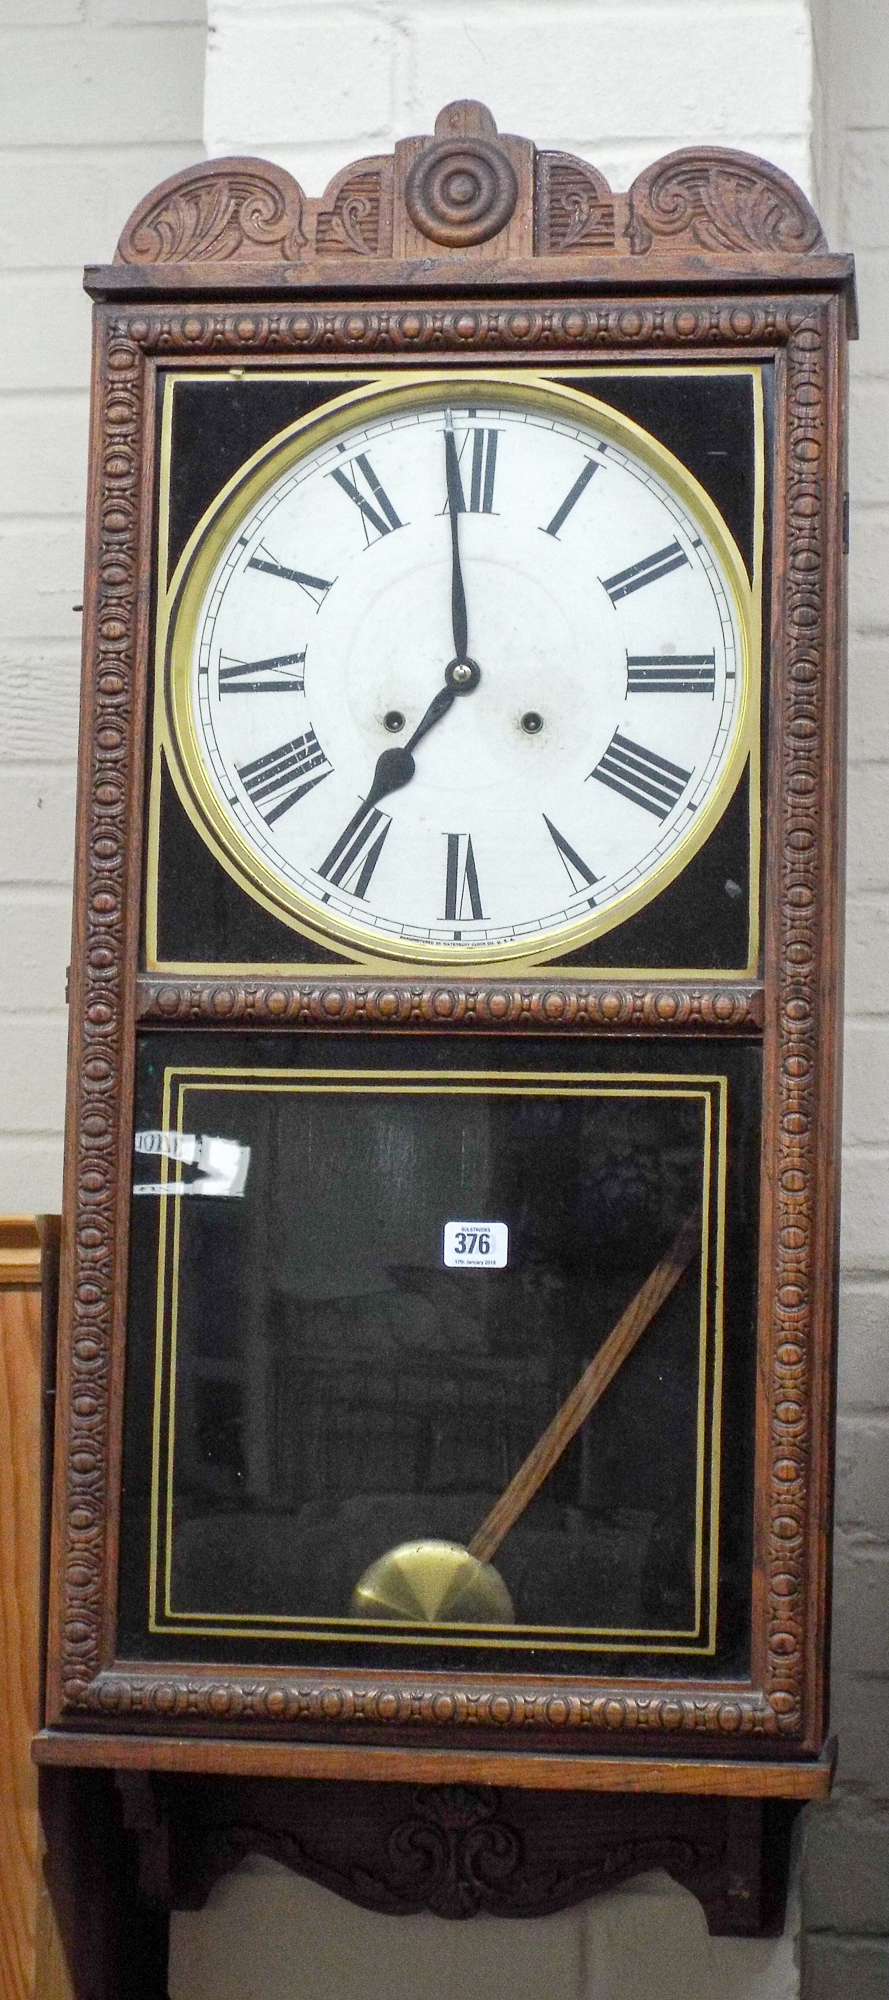 An American striking wall clock in oak and glazed case